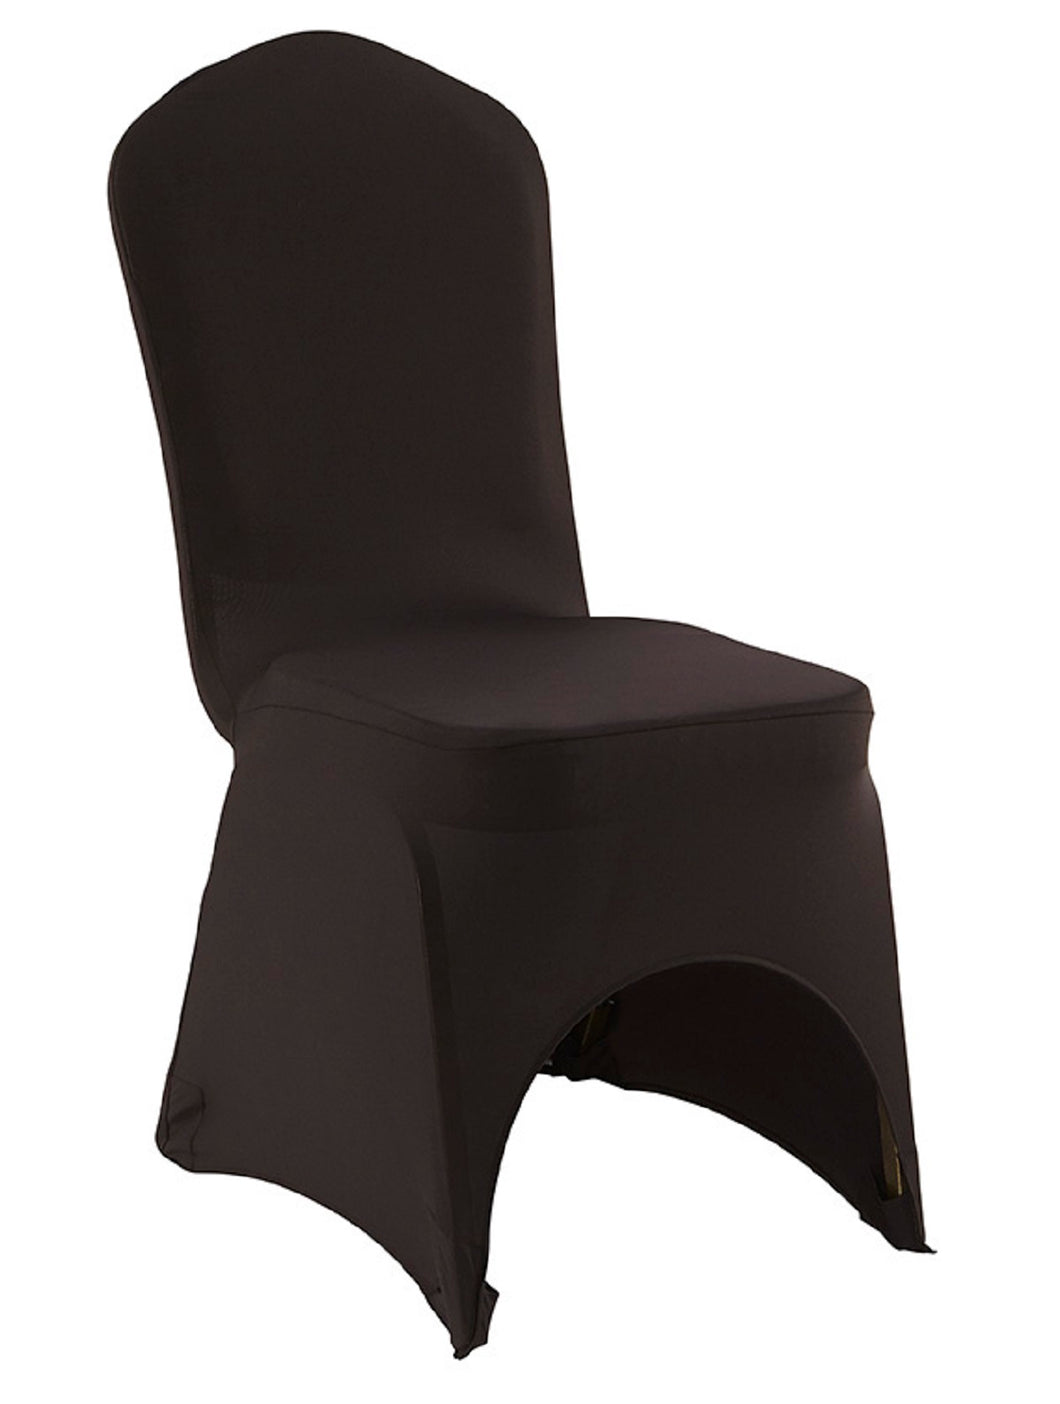 Black Banquet Chair Cover